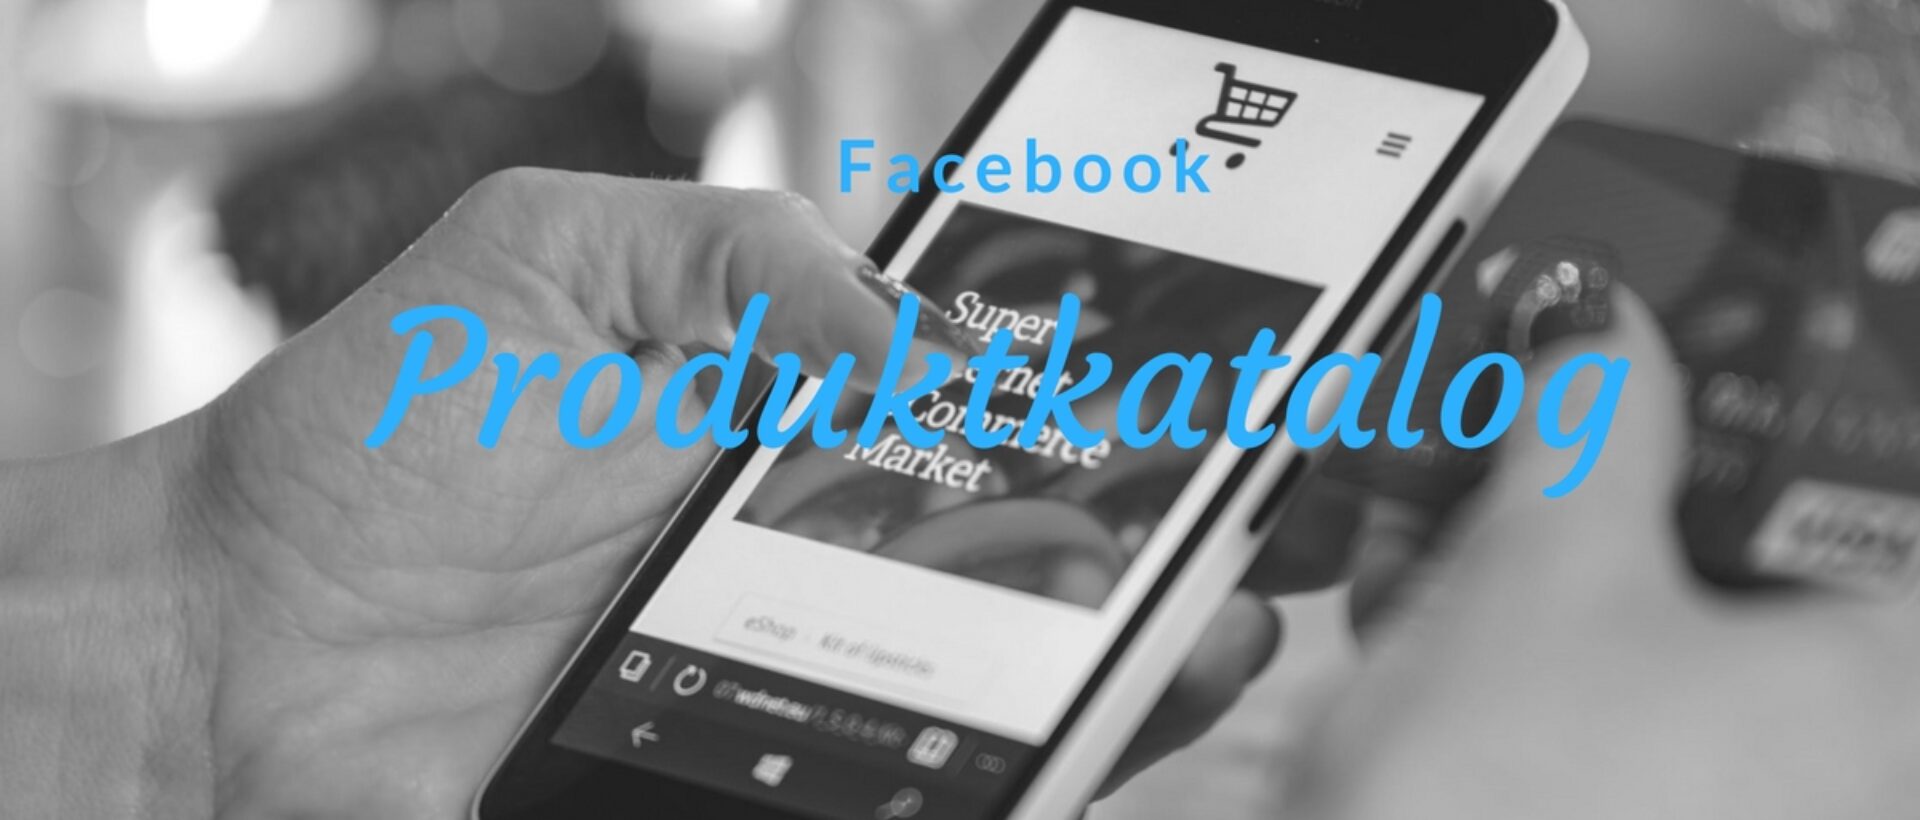 Facebook-Katalog-für-Online-Shops